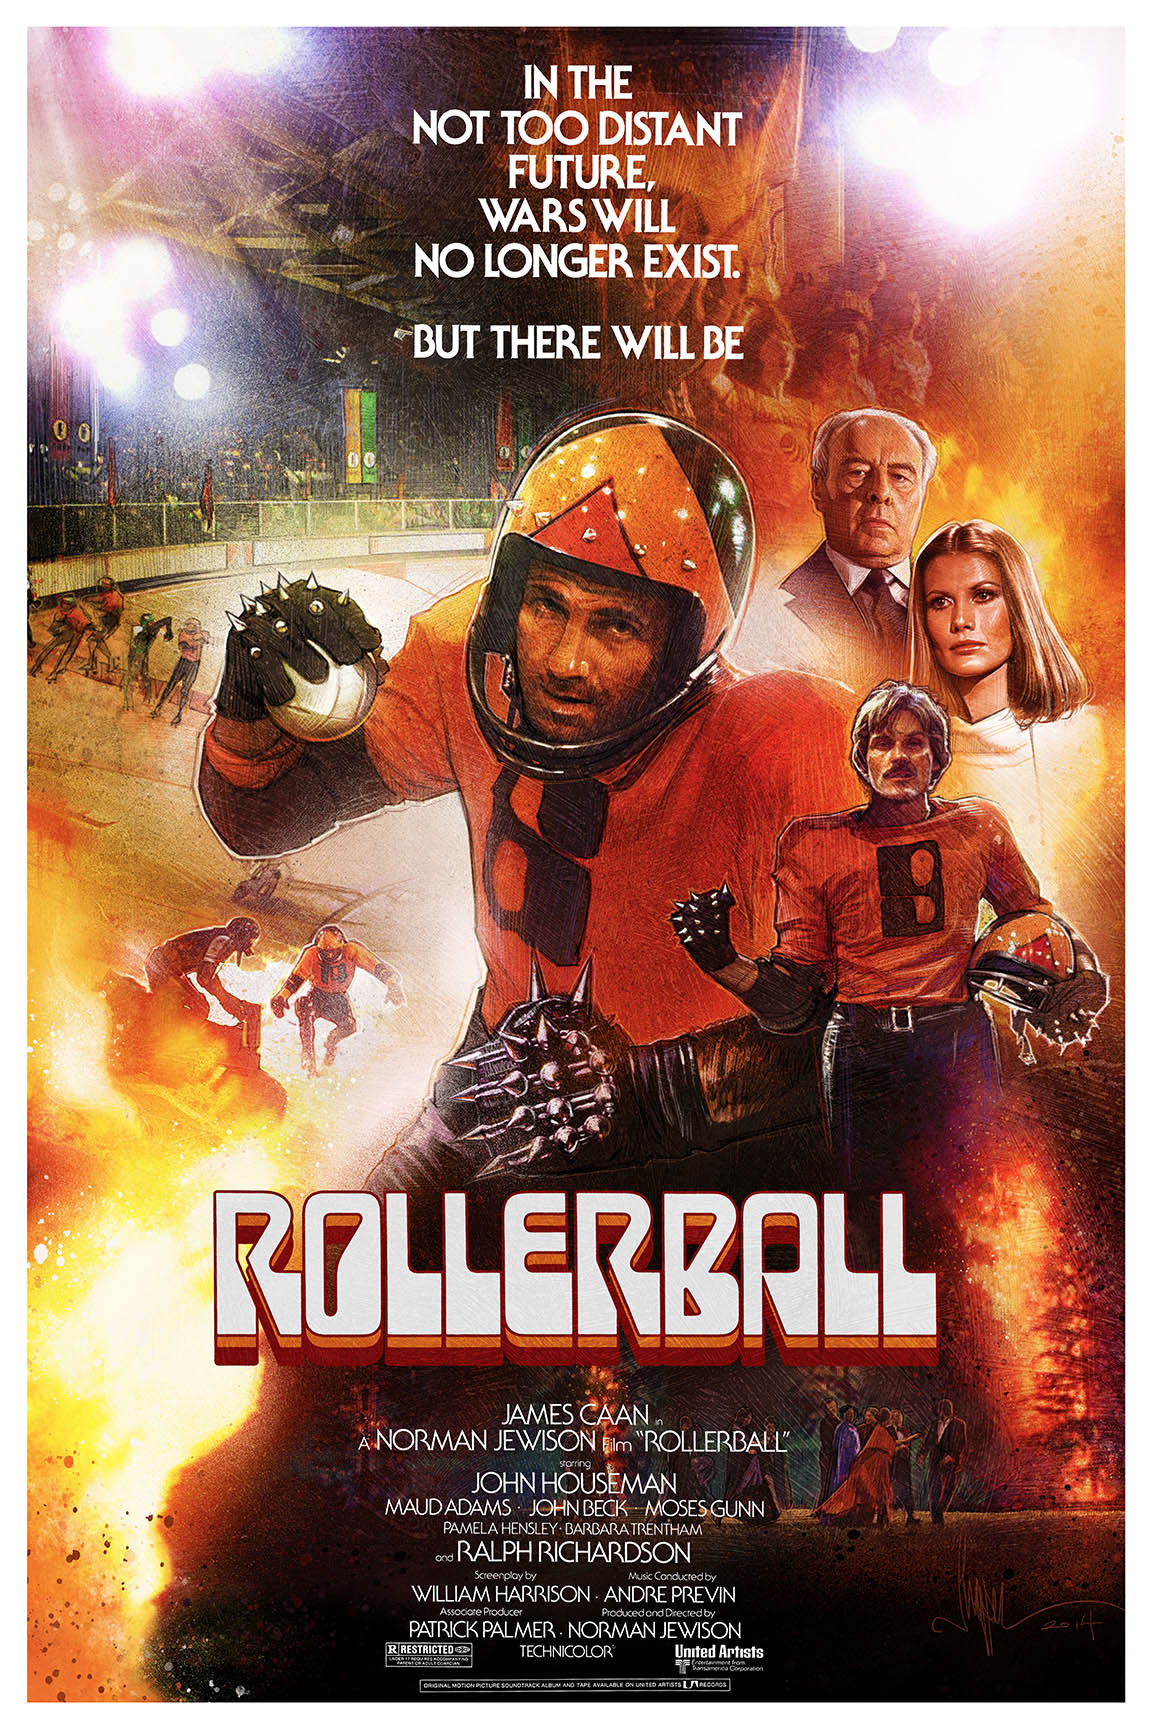 Rollerball bluray print caan Scifi films home entertainment